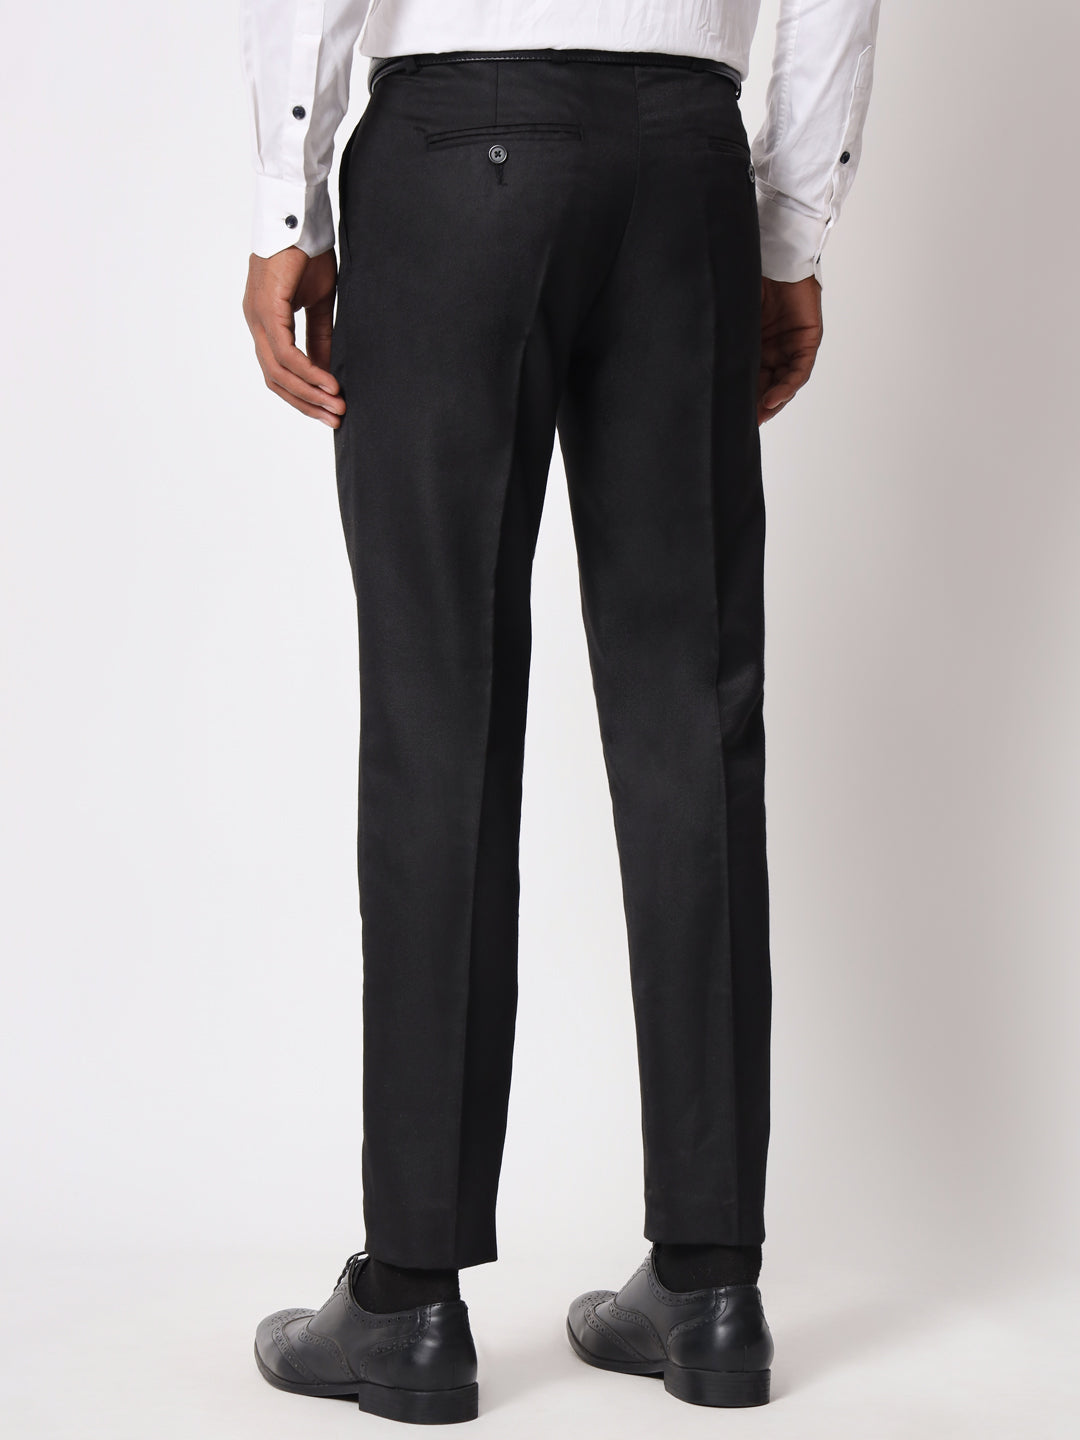 Black Regular Fit Formal Trousers for Men